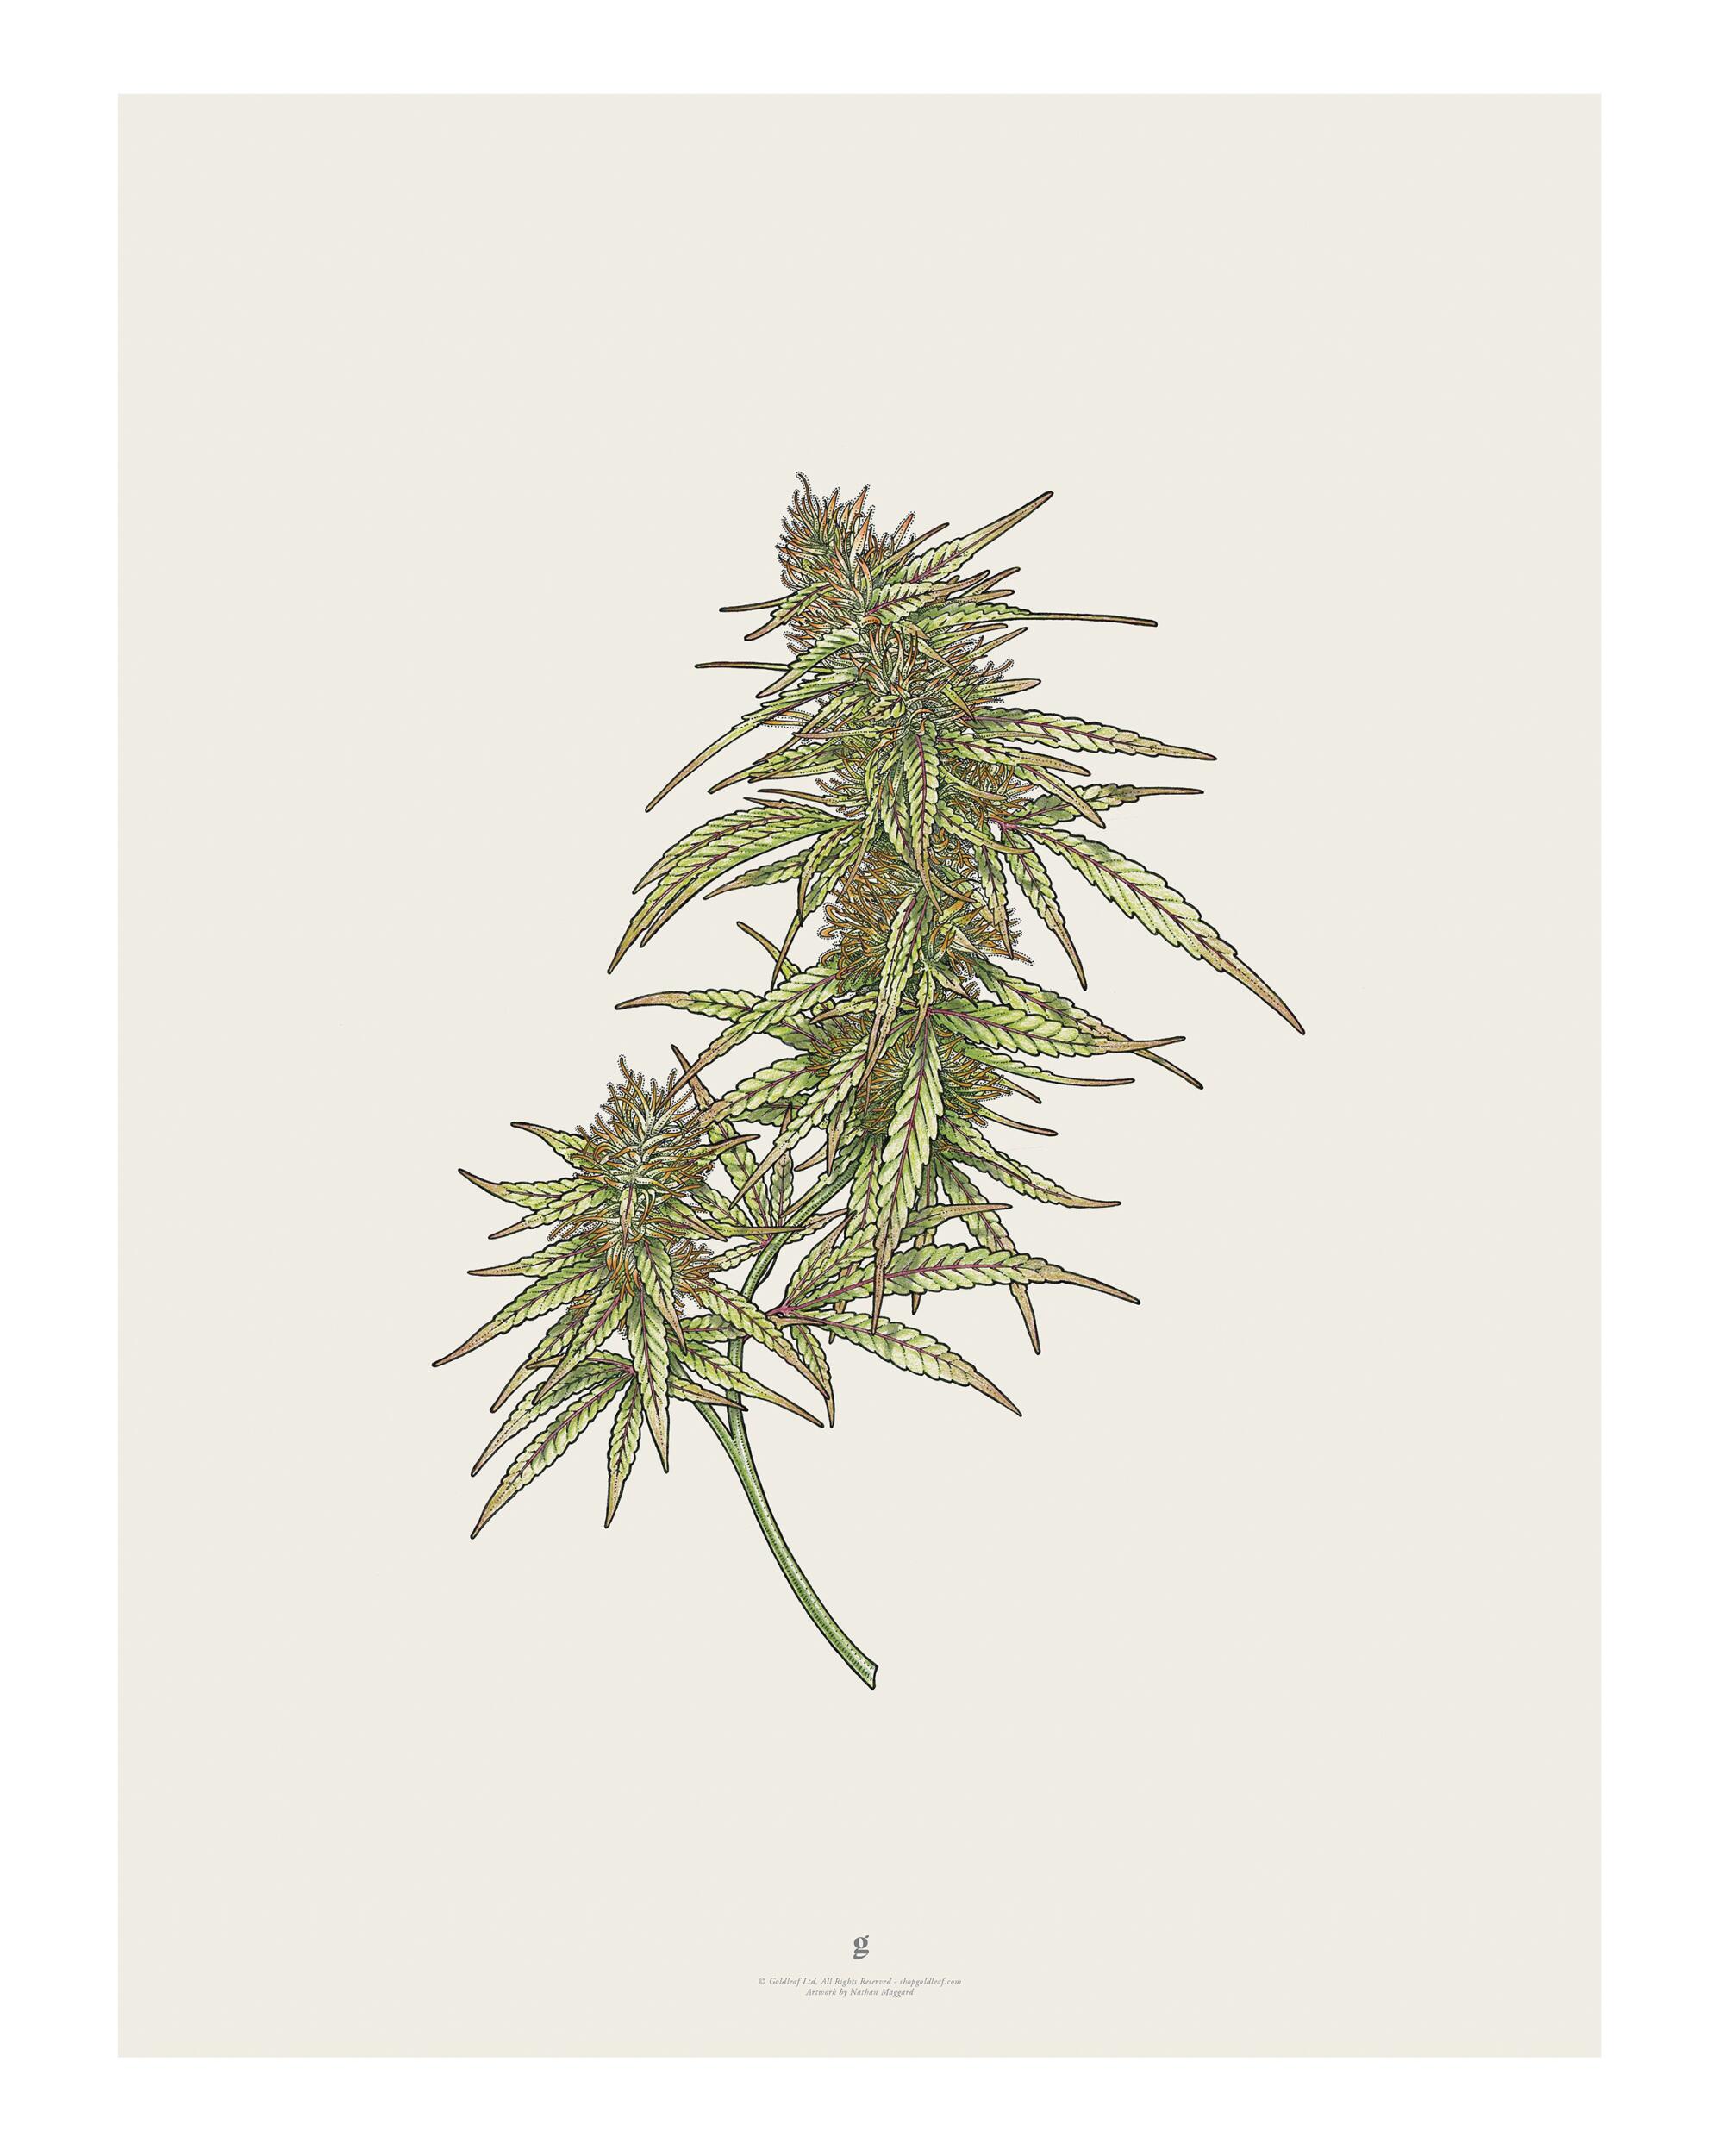 A cannabis botanical print by Goldleaf